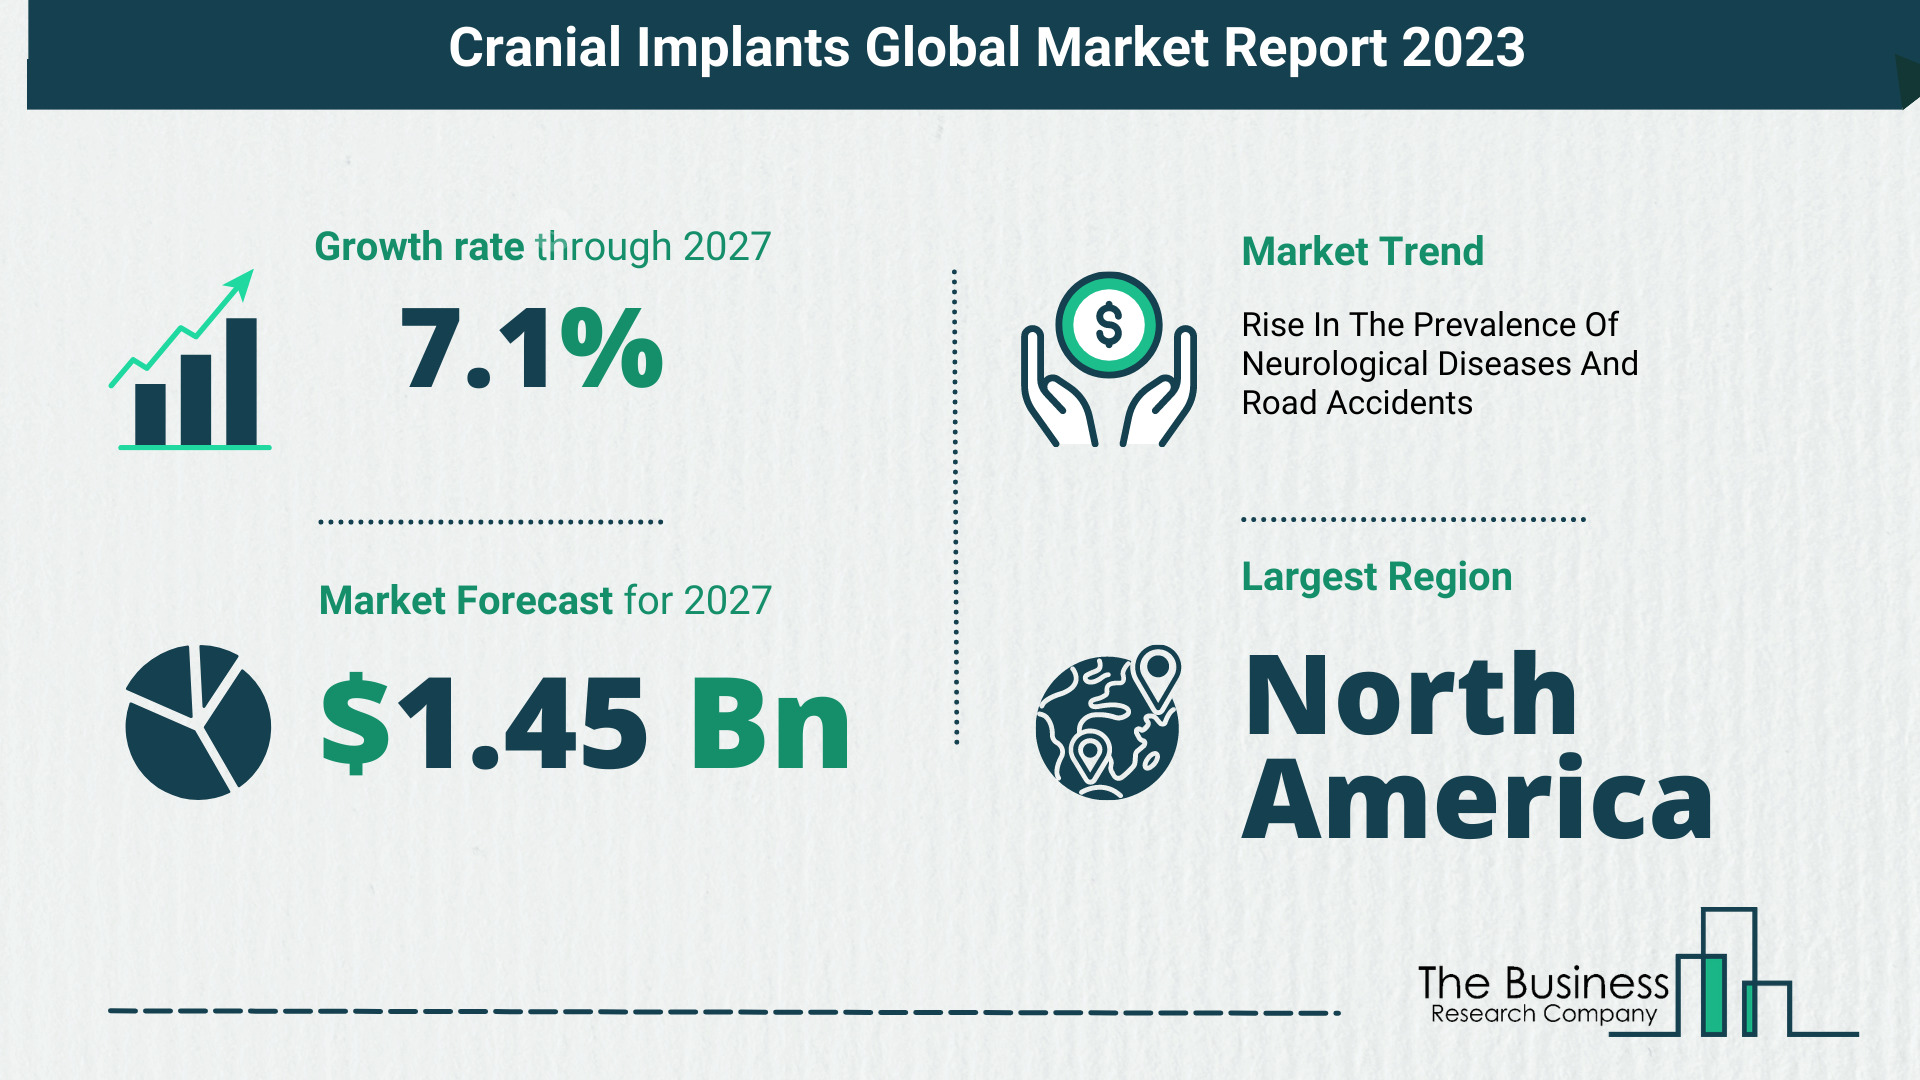 Cranial Implants Market